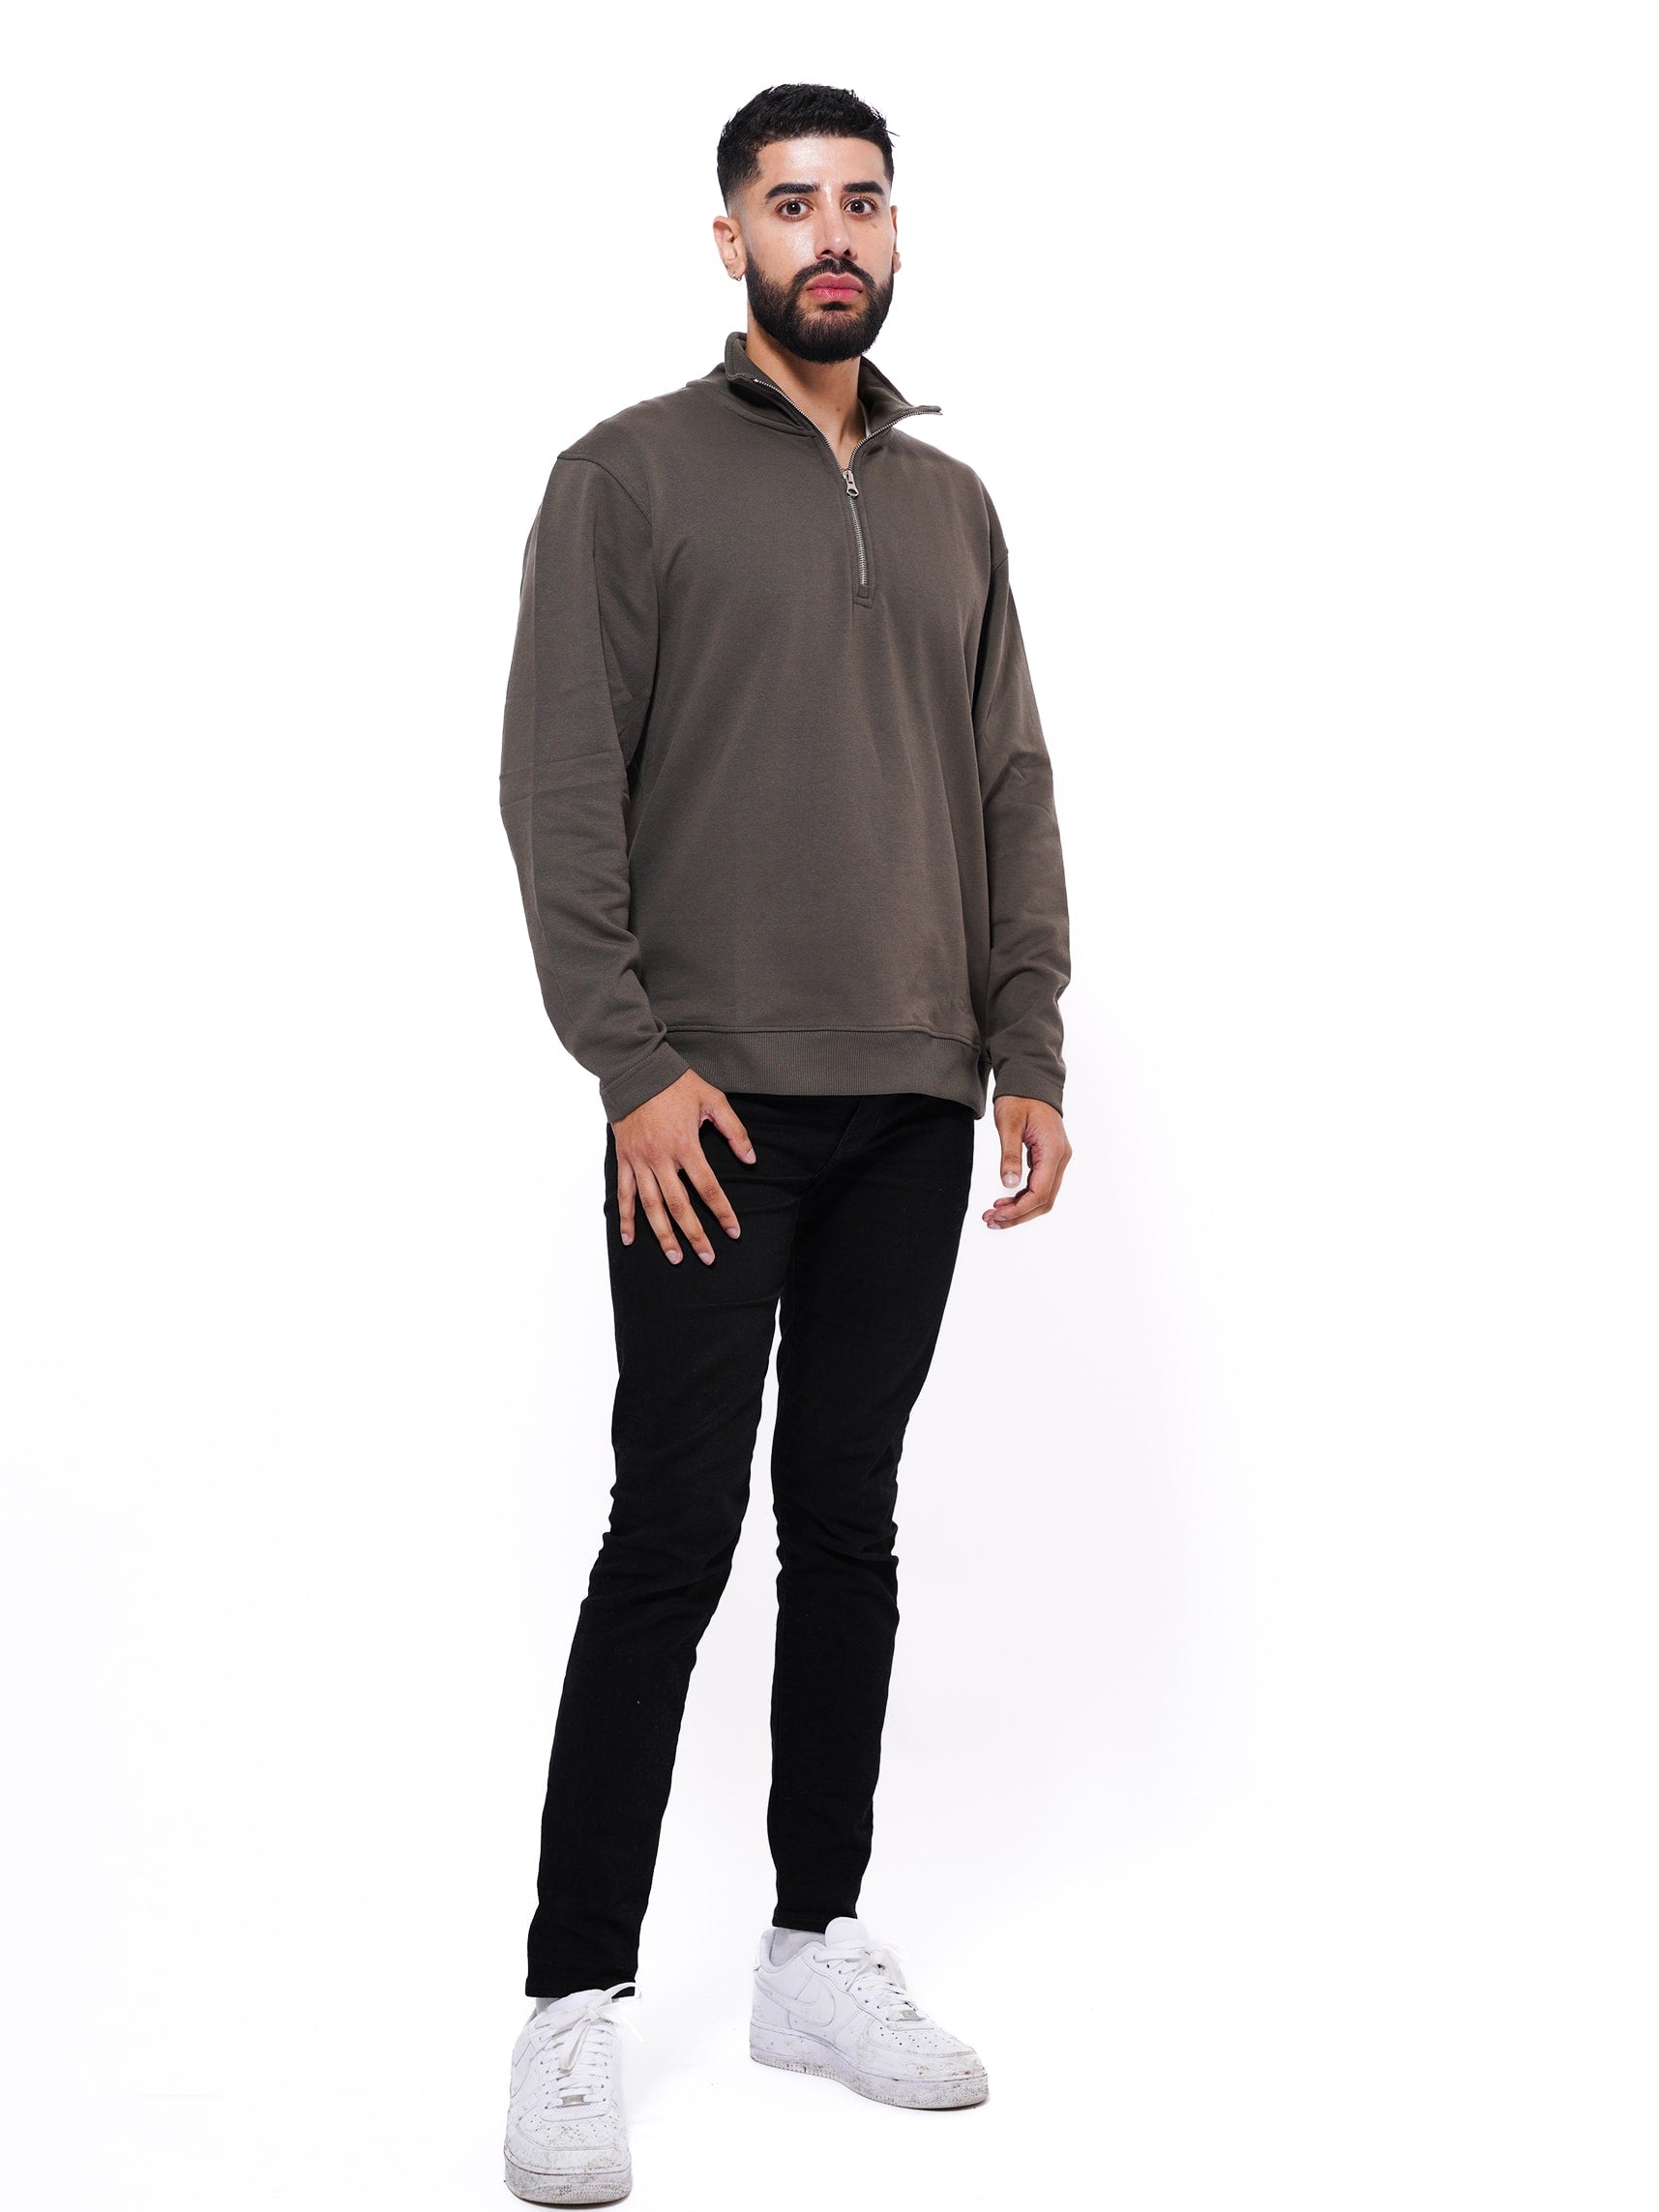 Men's Long Sleeve High Neck Sweatshirt | Crocodiles Color - inteblu